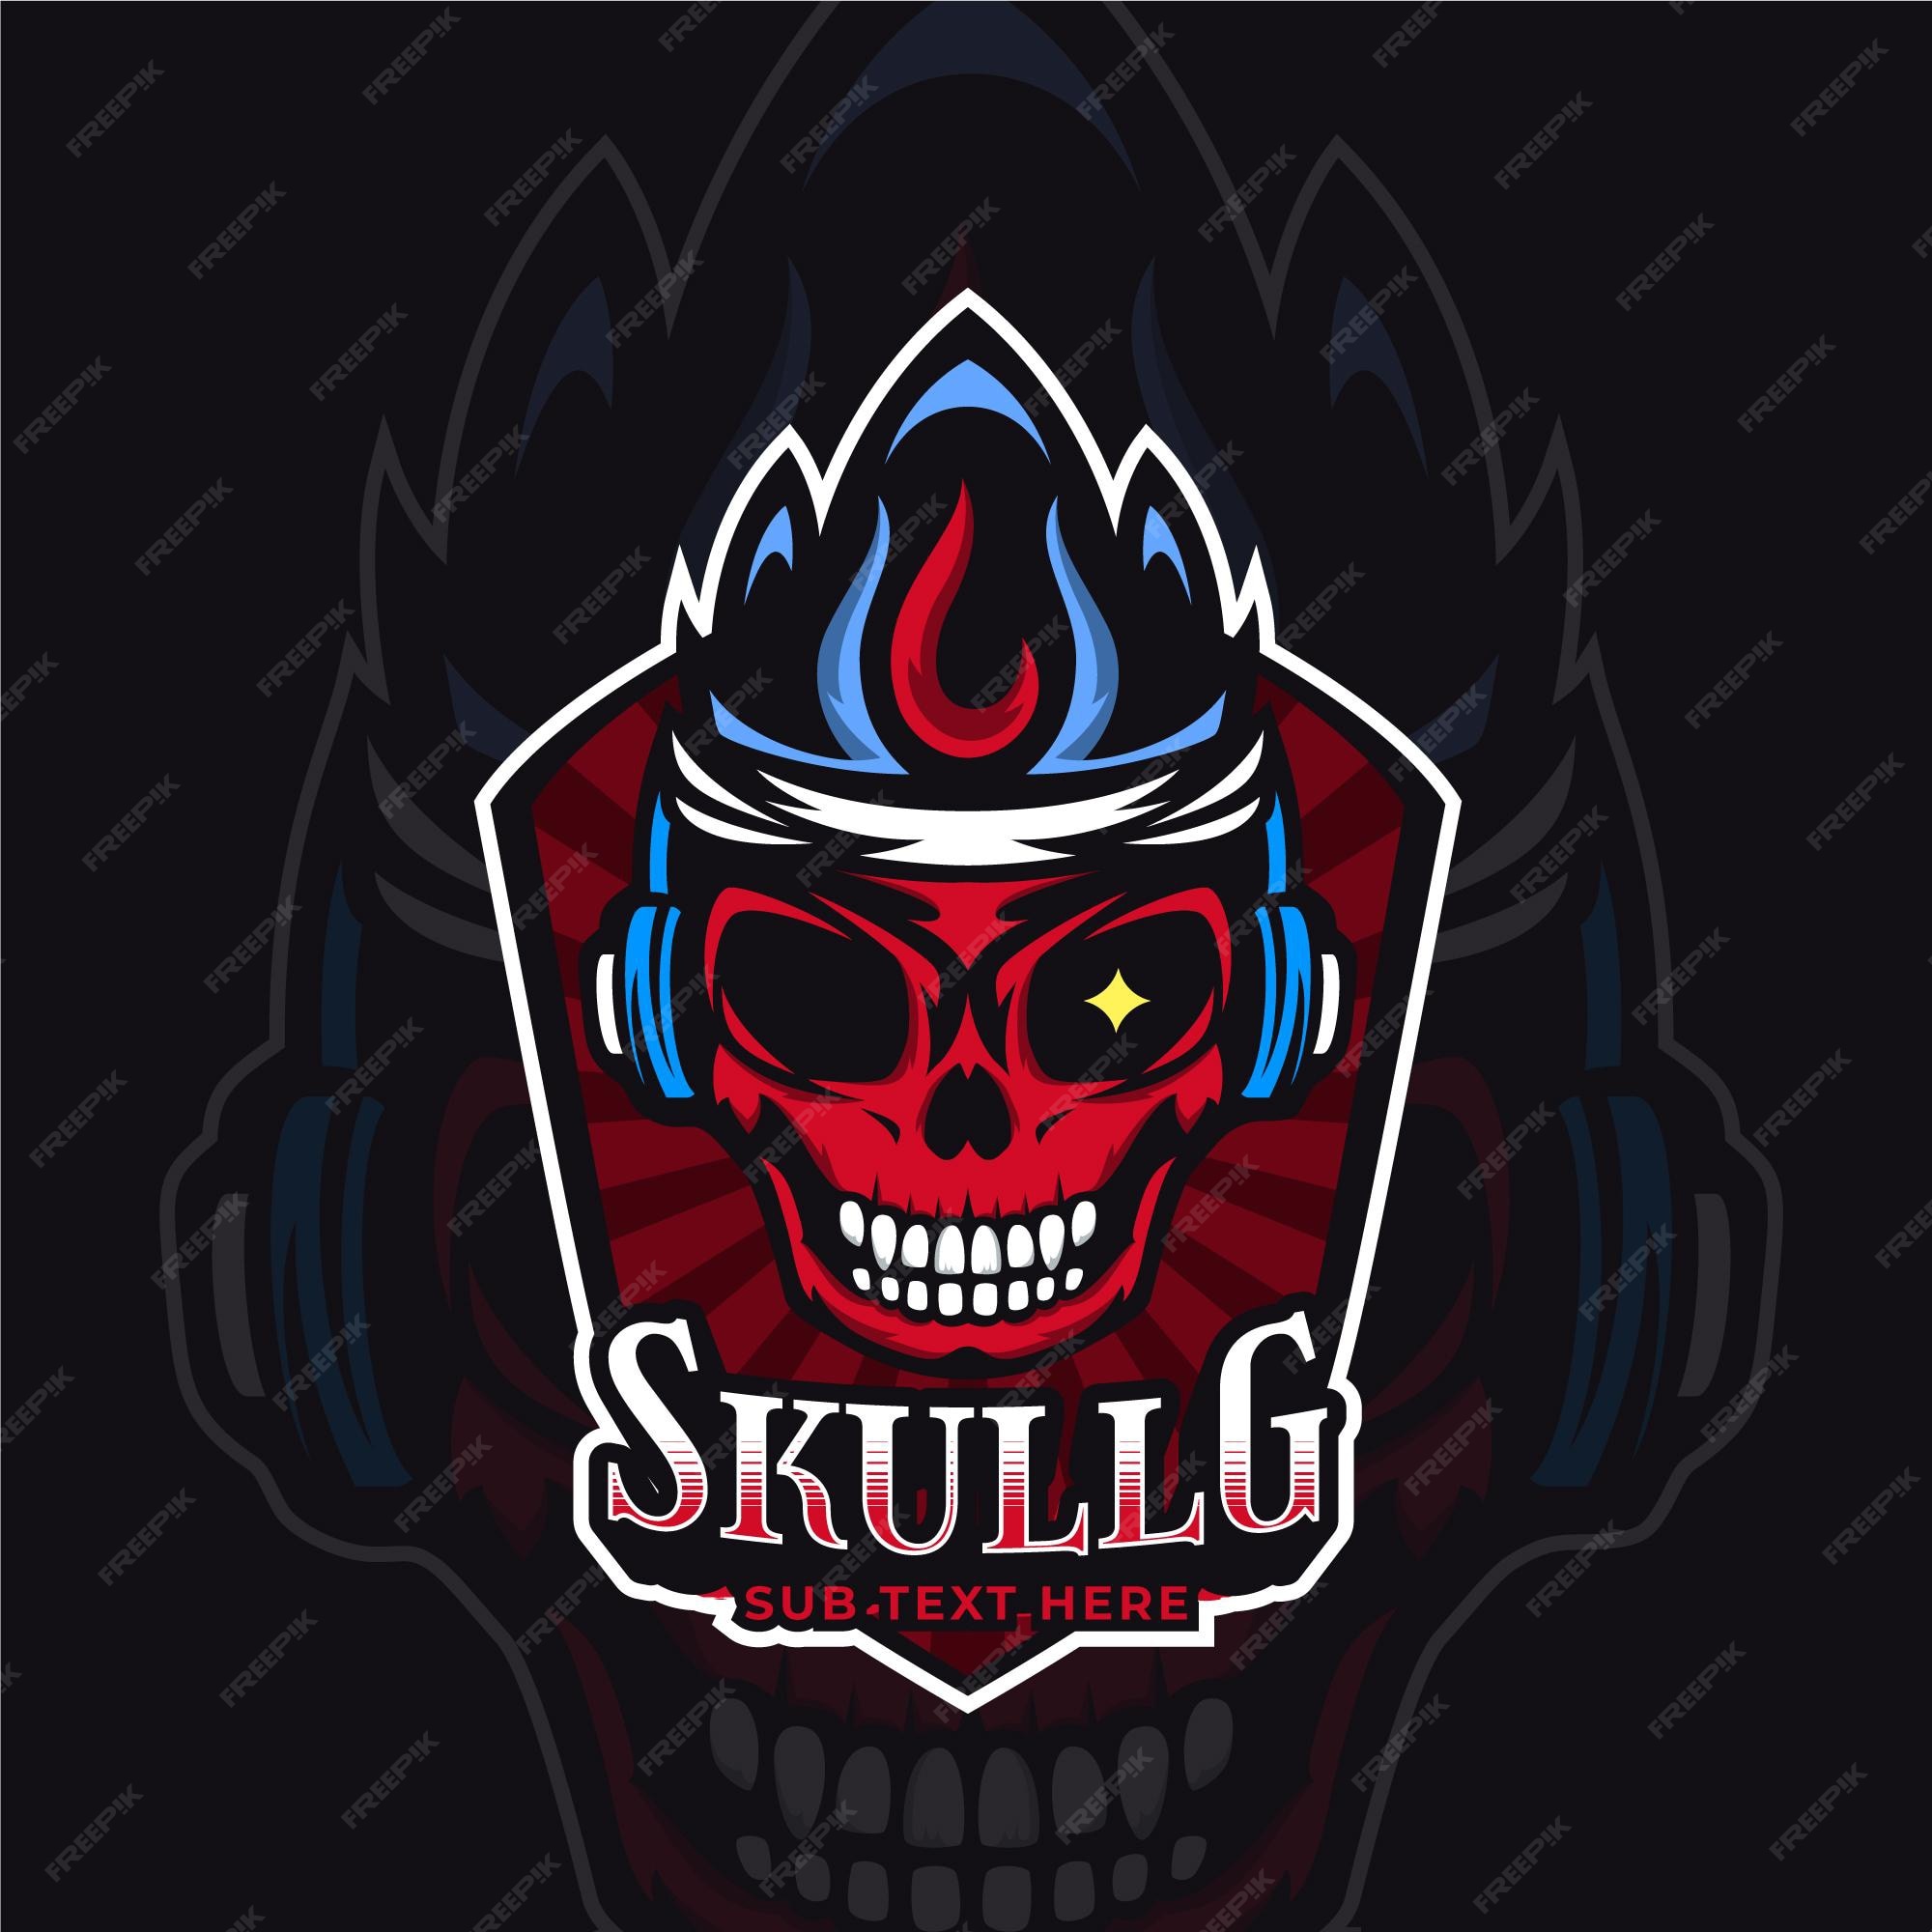 Skull gaming logo Vectors & Illustrations for Free Download | Freepik